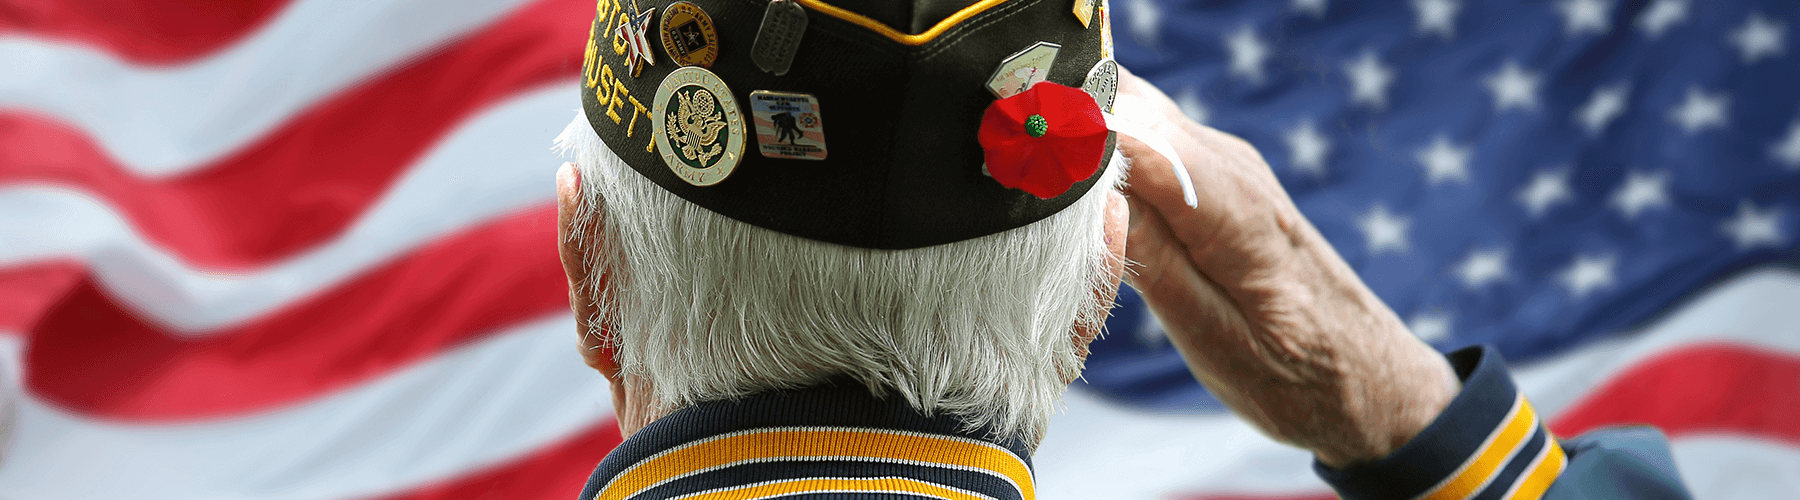 Elderly military veteran salutes the flag